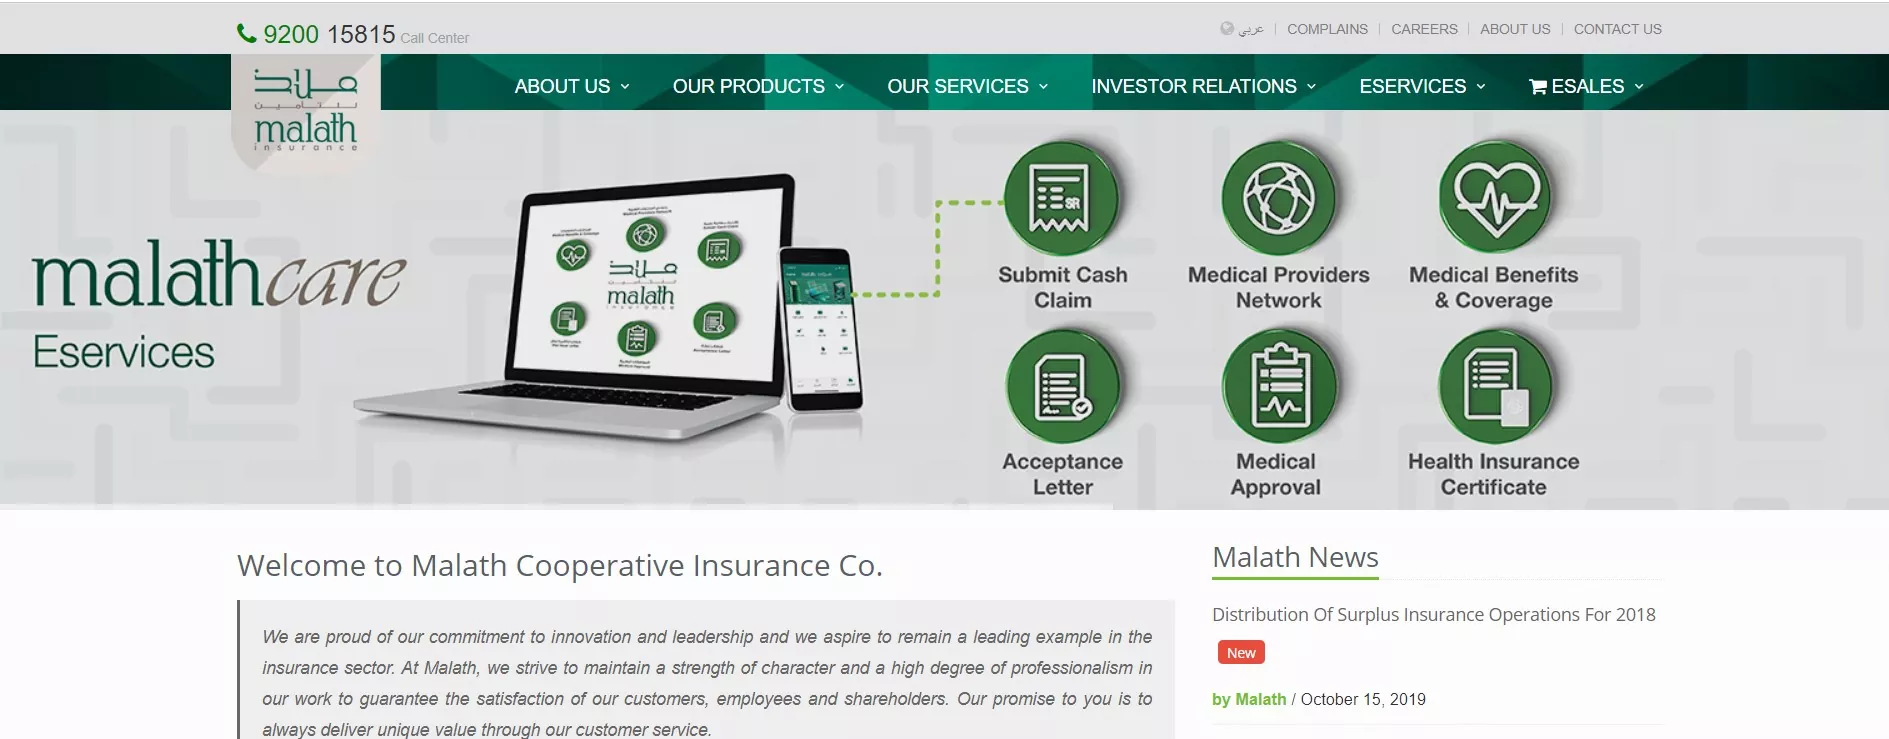 Malath Cooperative Insurance Co.